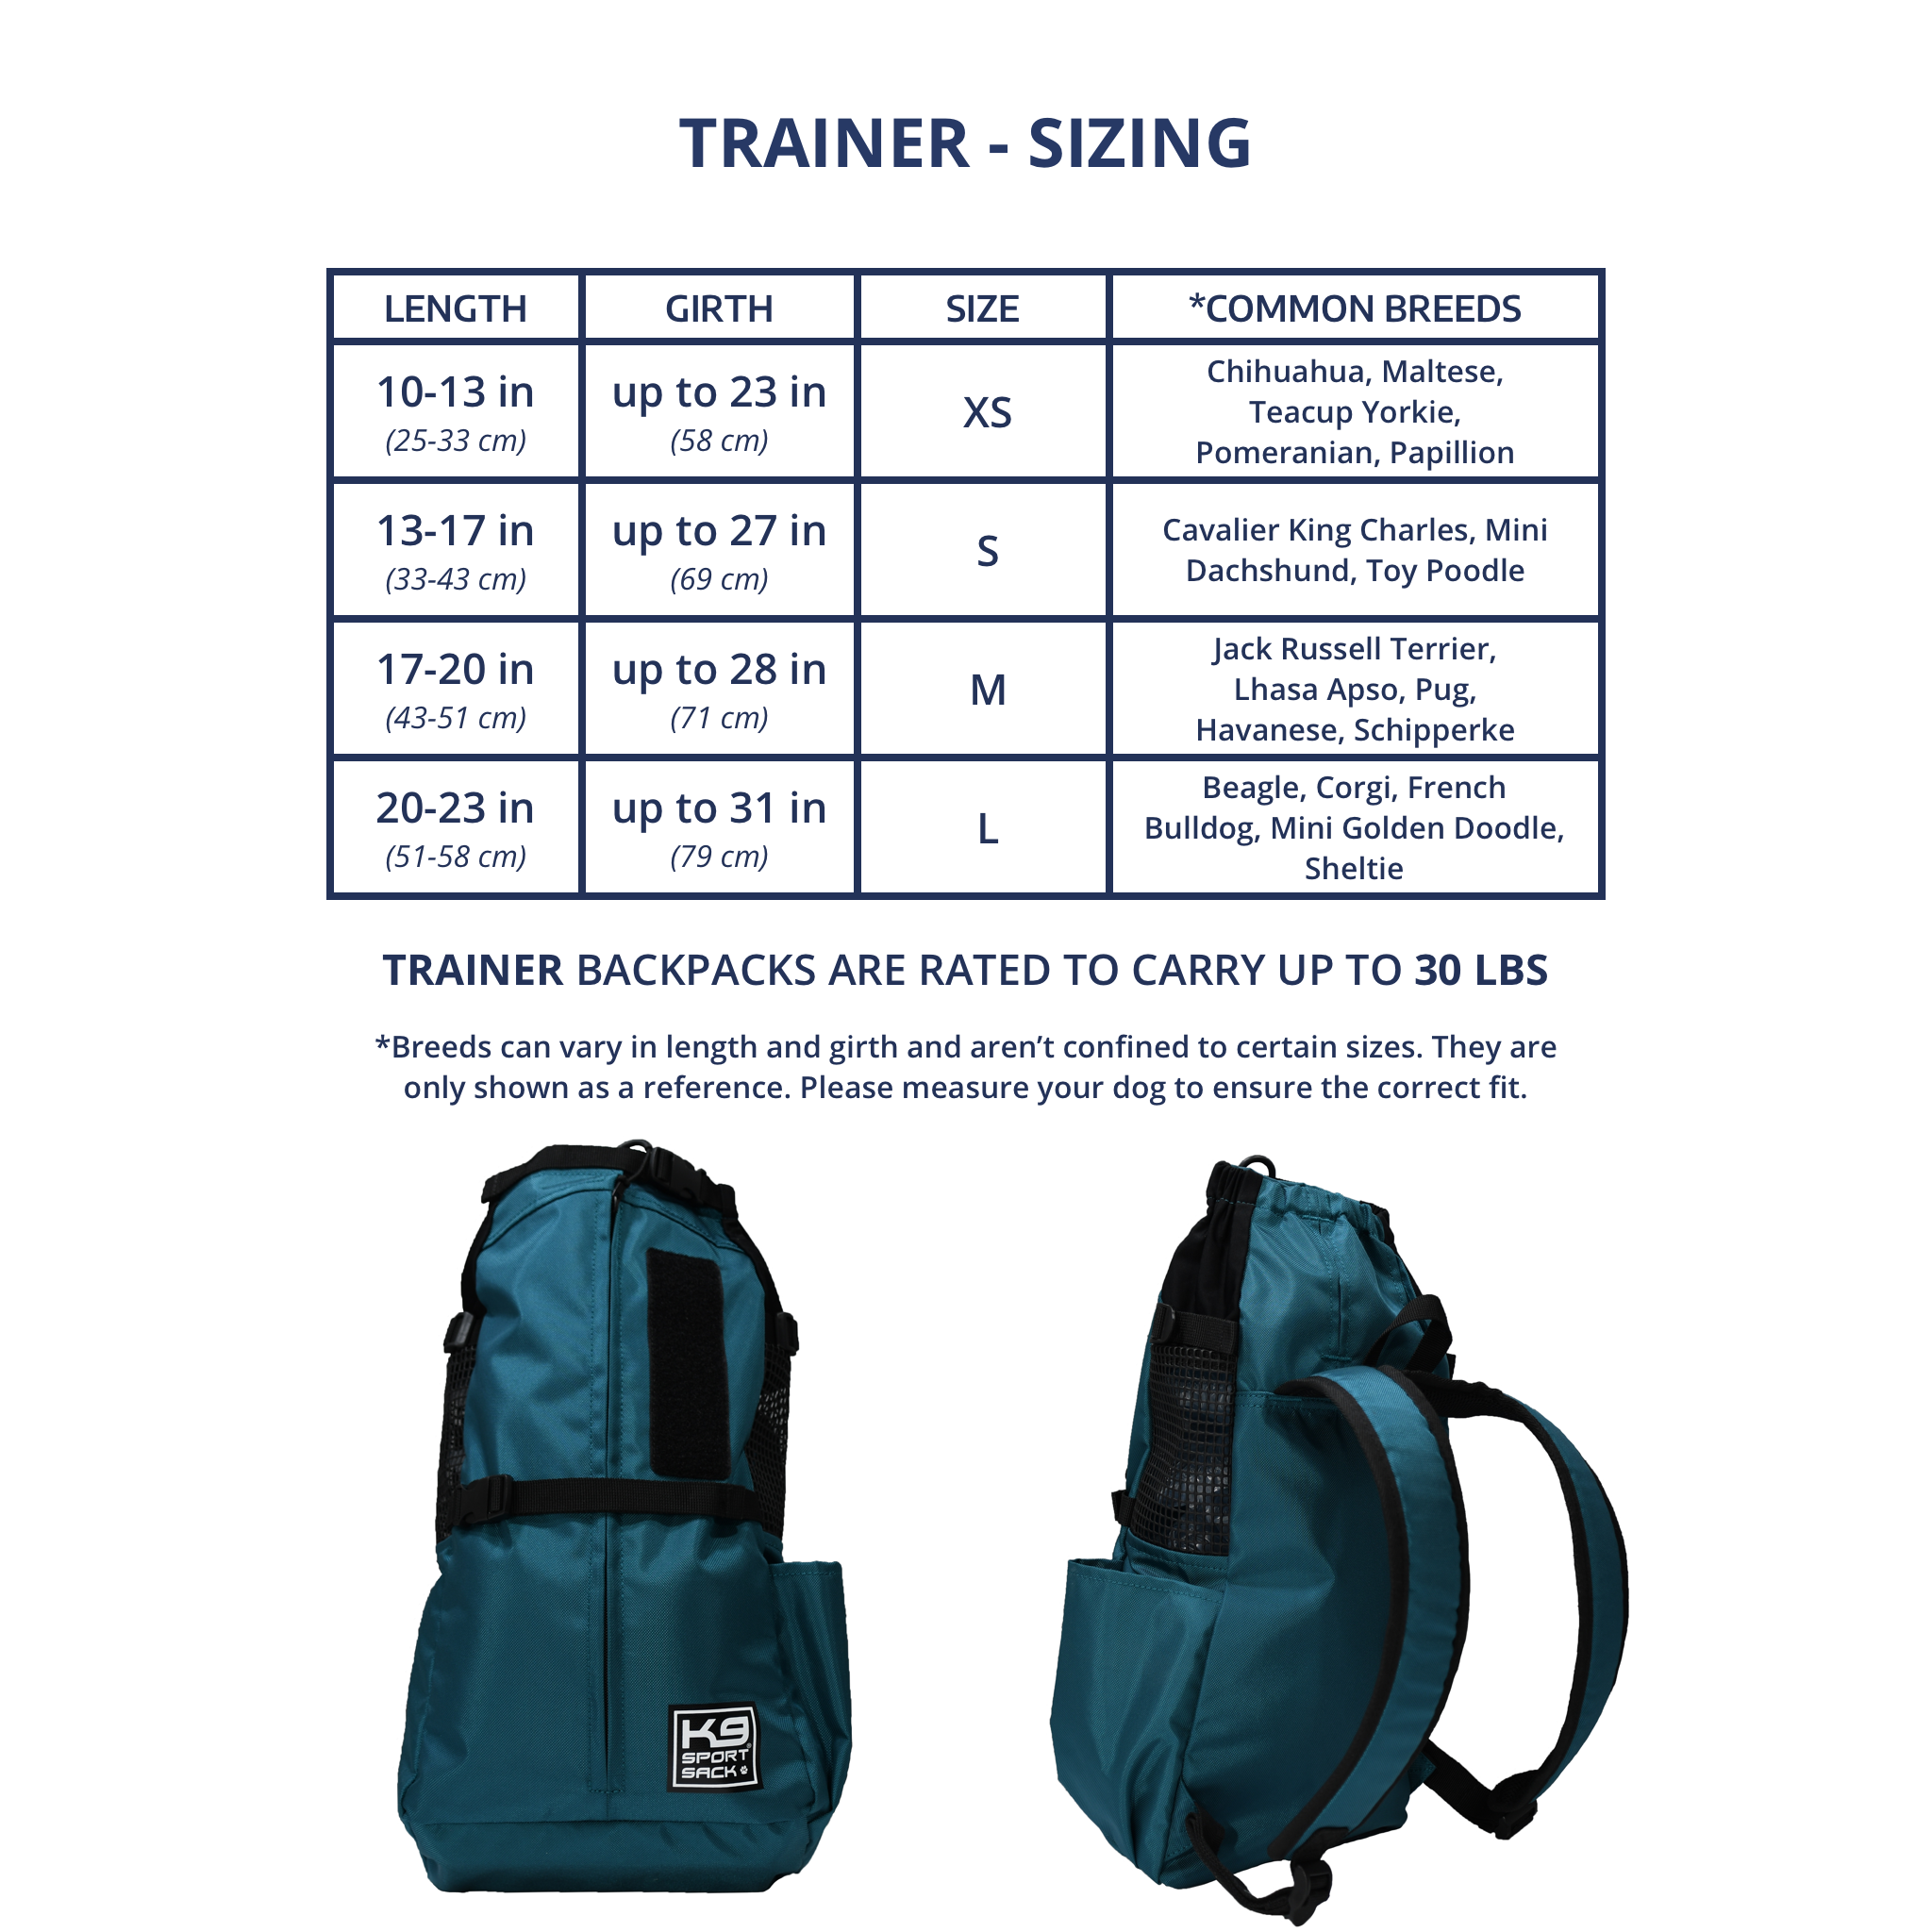 K9 Sport Sack Trainer Backpack Pet Carrier Coral - Mutts & Co.